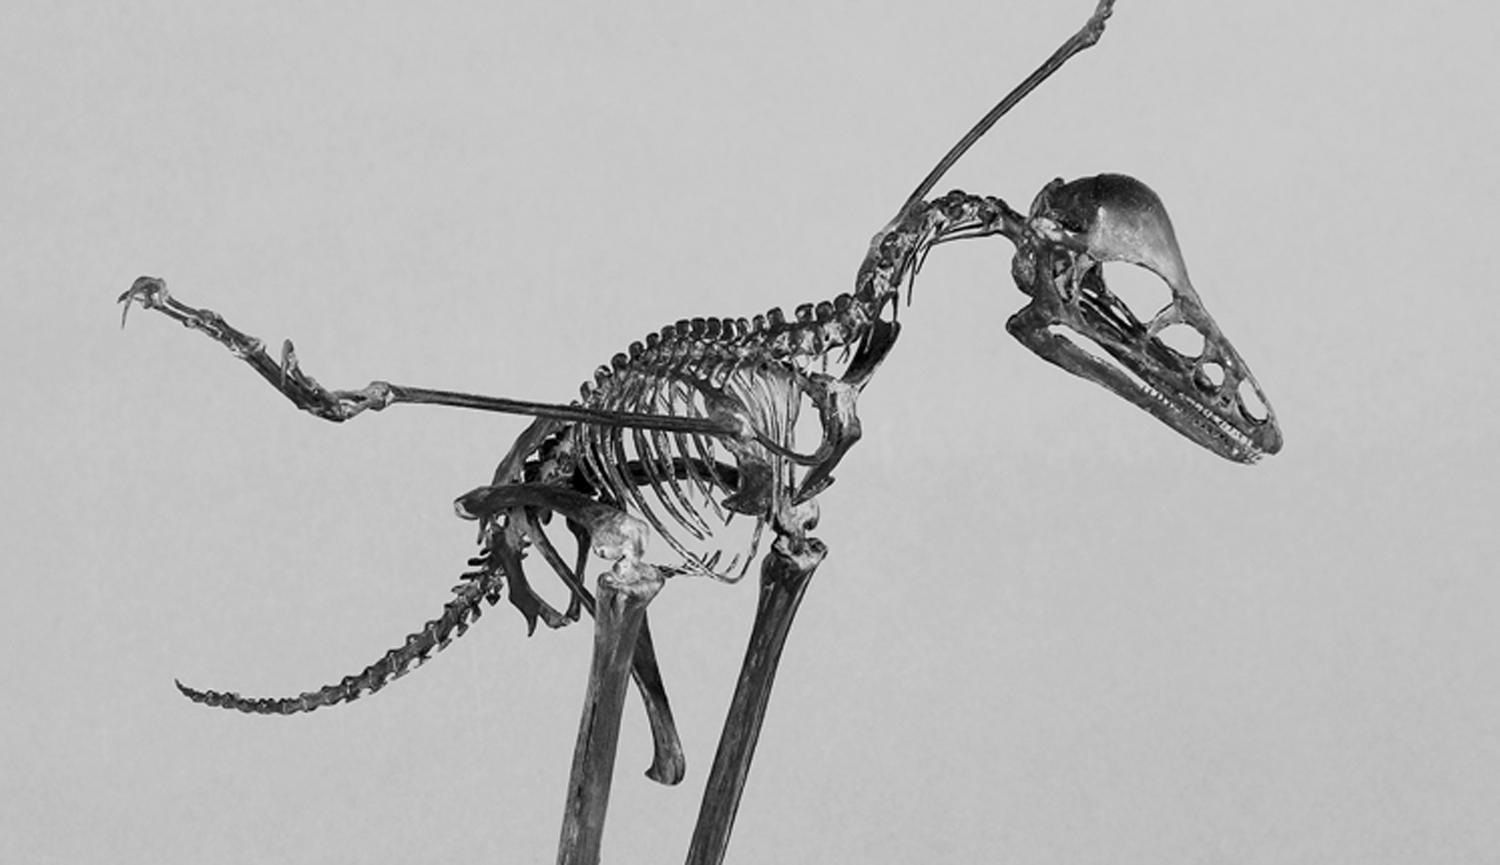 Squelette d'anchiornis